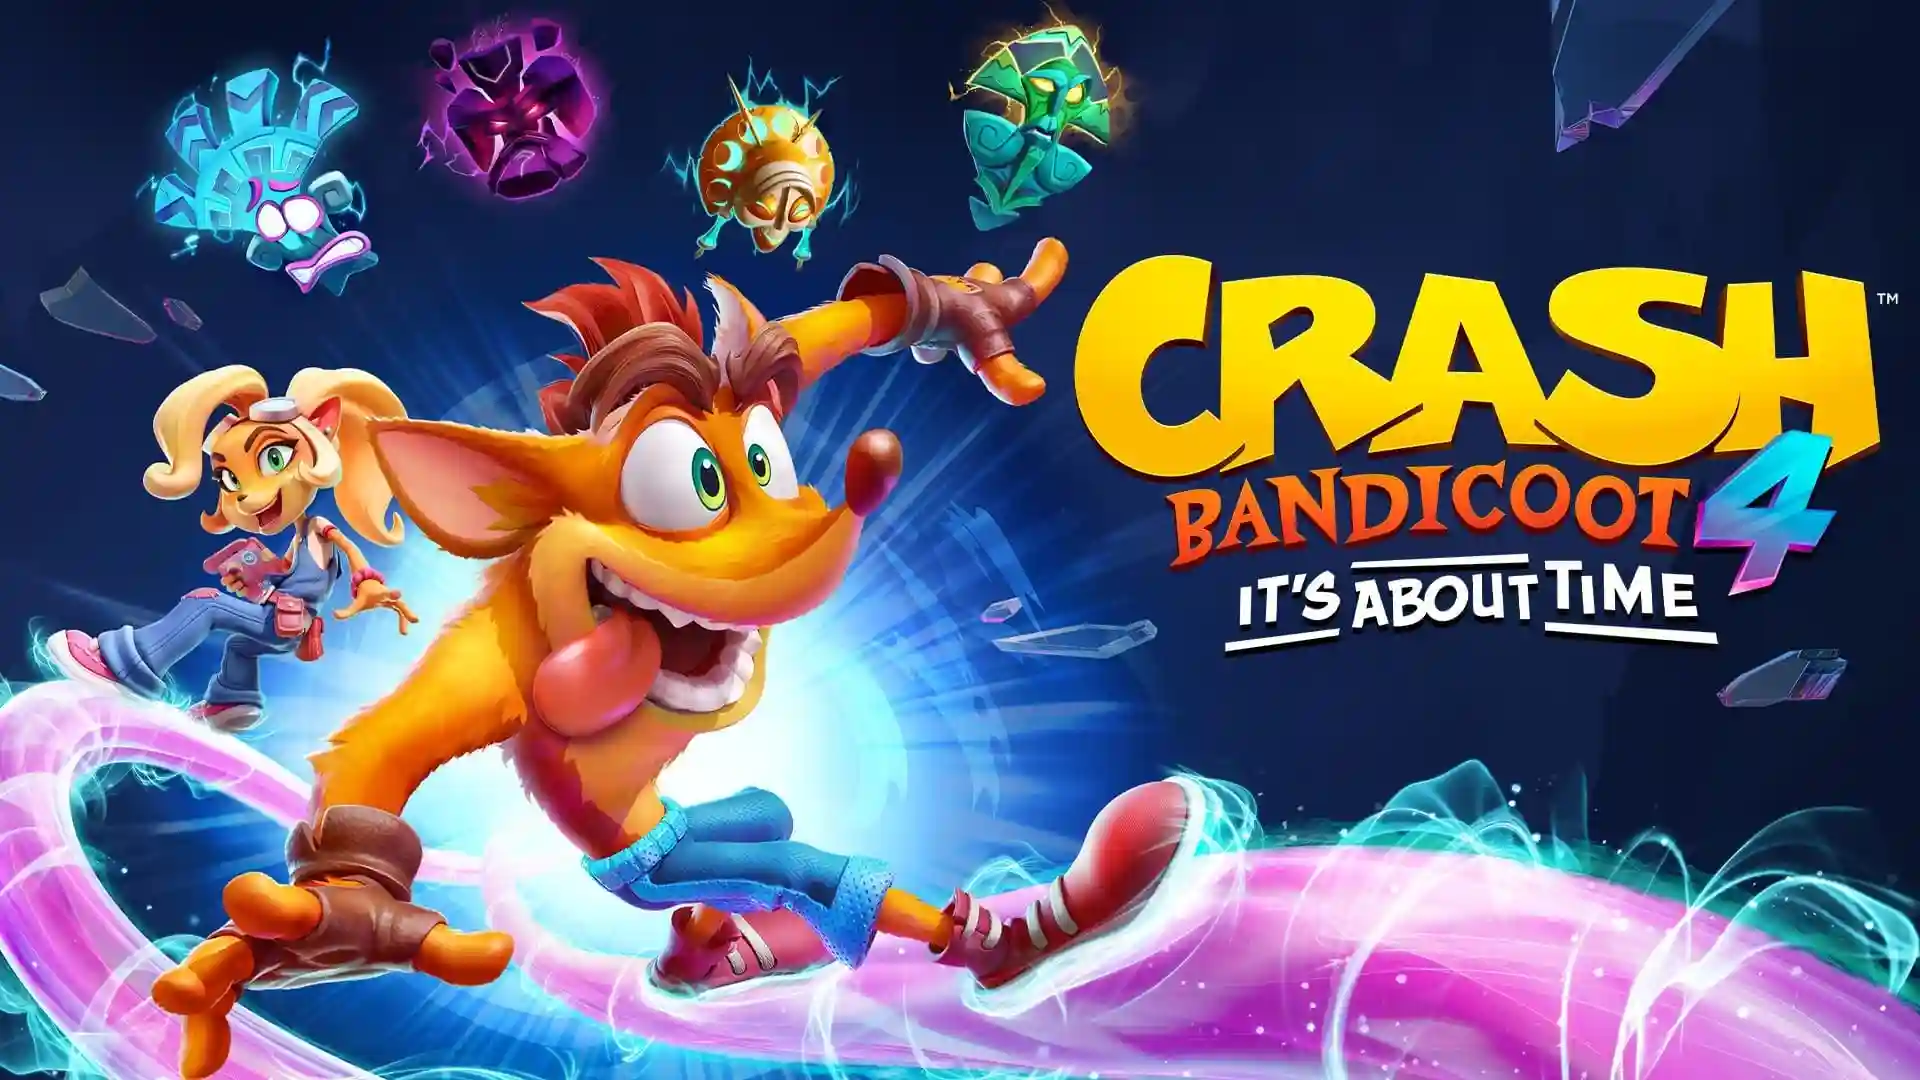 Crash Bandicoot 4 Joins Gamscom With New Gameplay